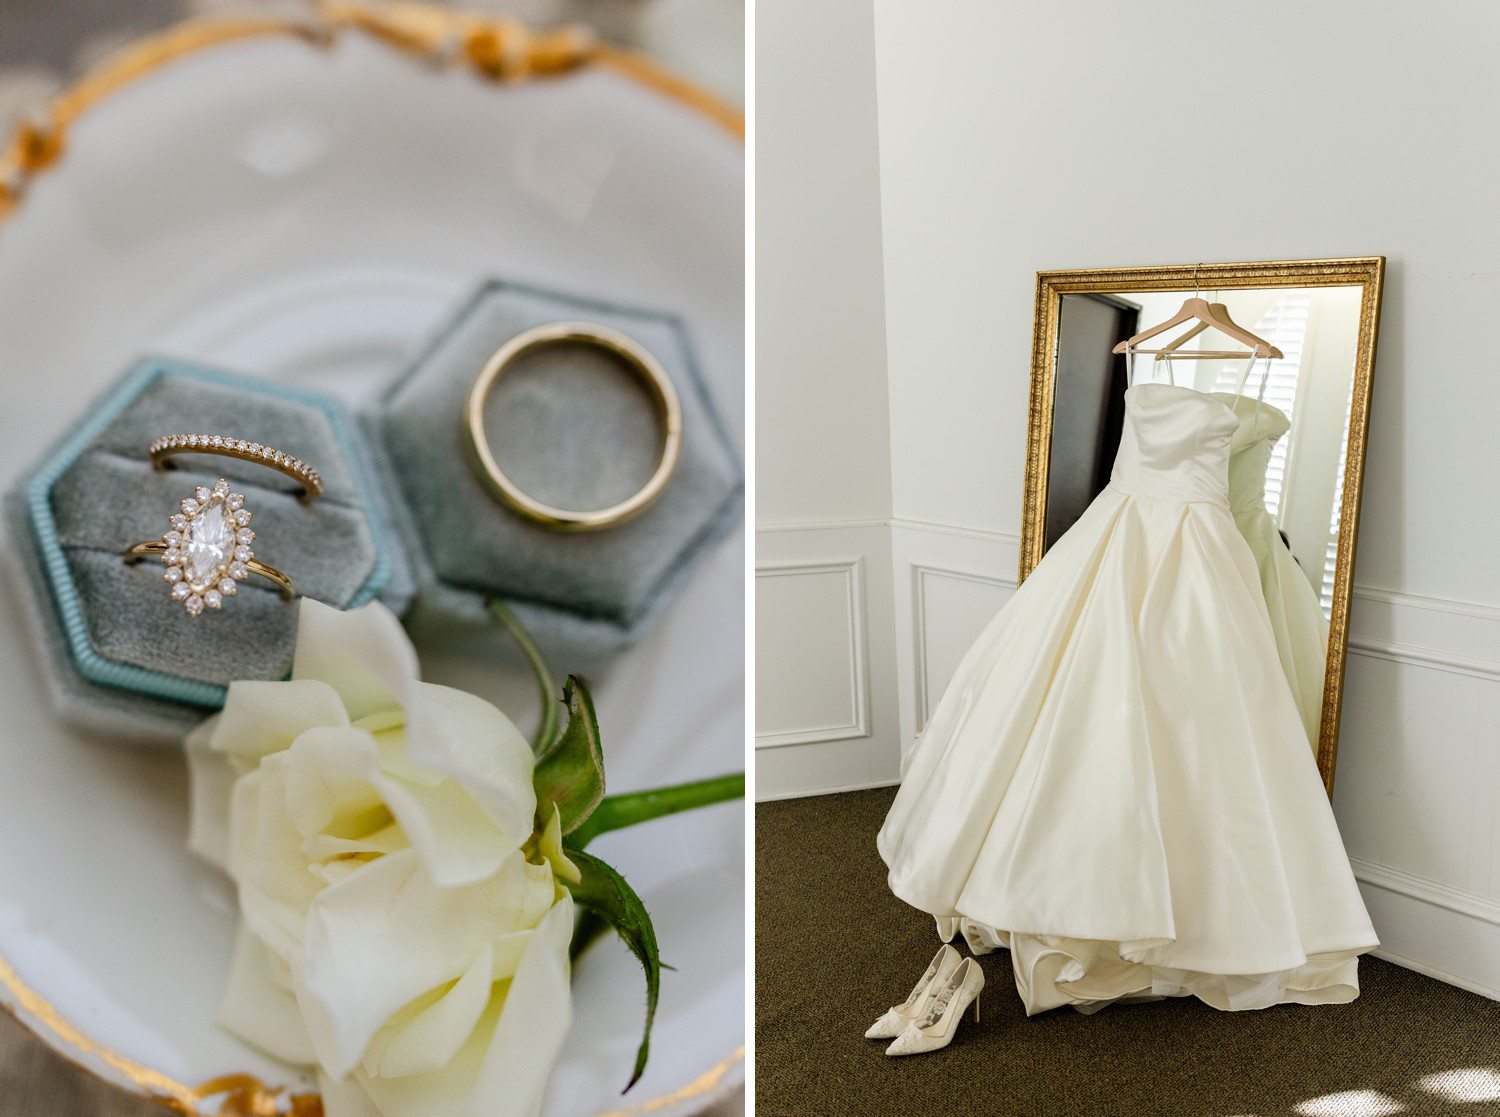 Wedding ring and wedding dress hanging on mirror.